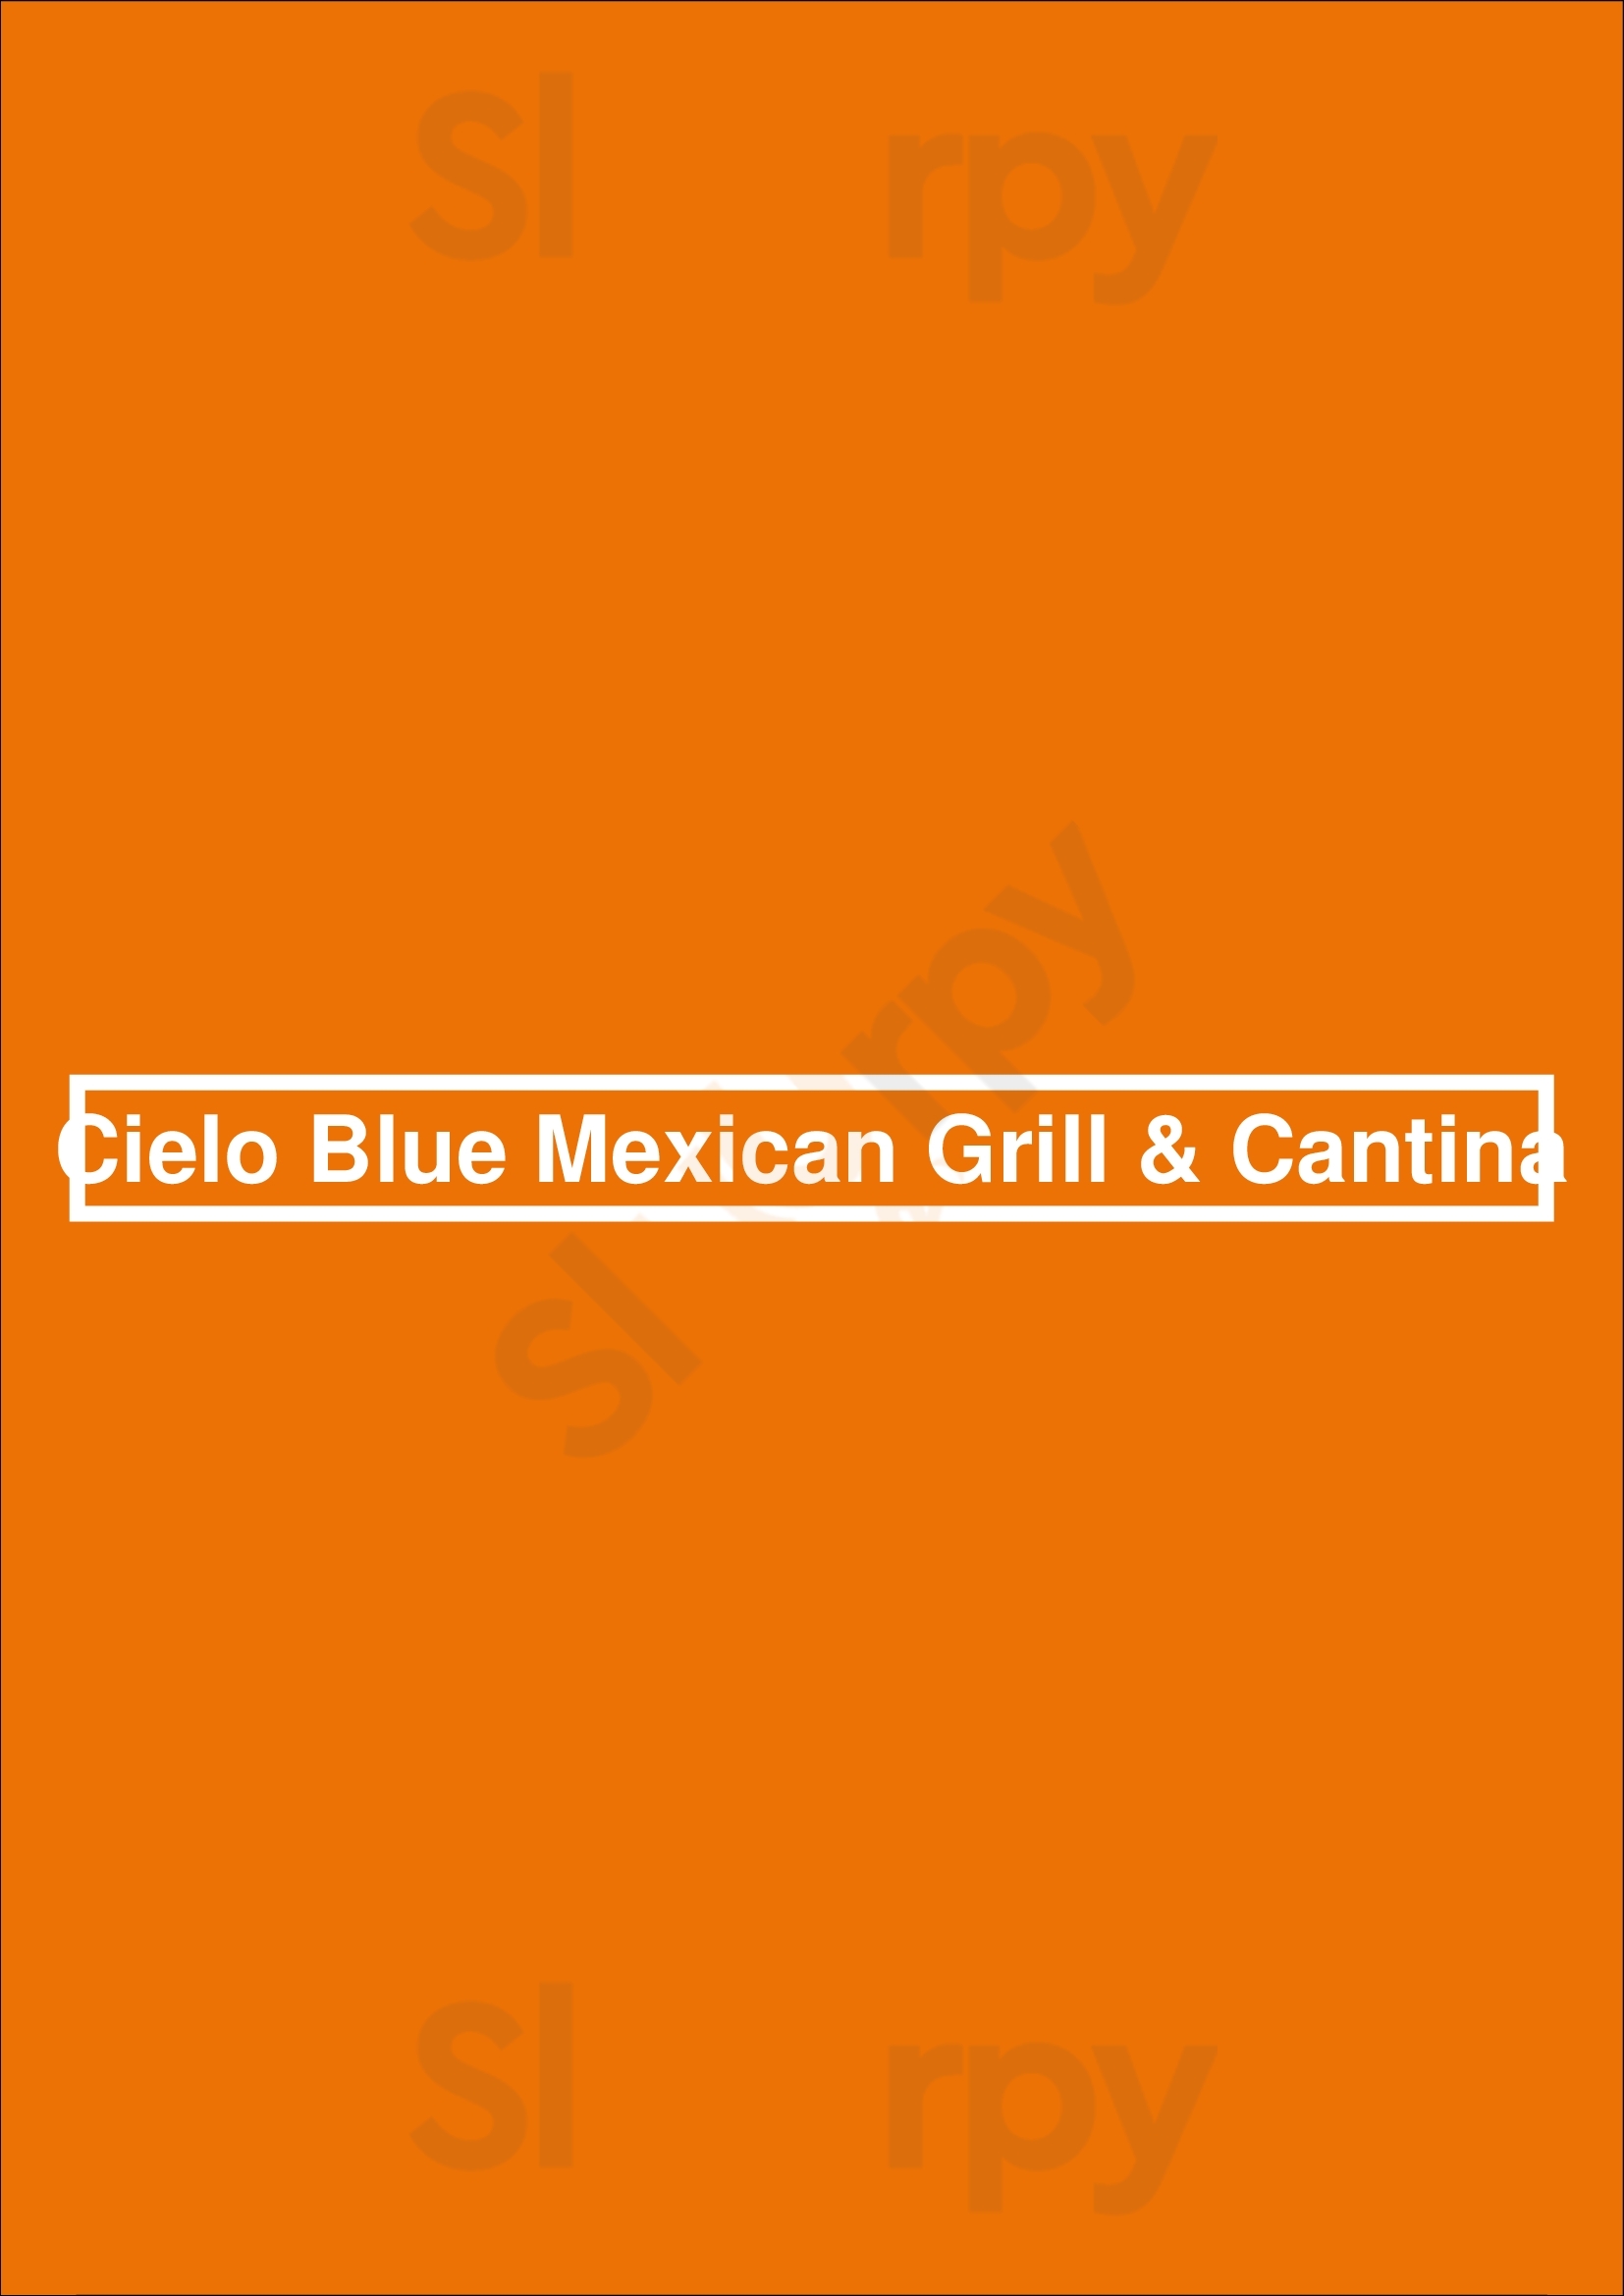 Cielo Blue Mexican Grill & Cantina Smyrna Menu - 1